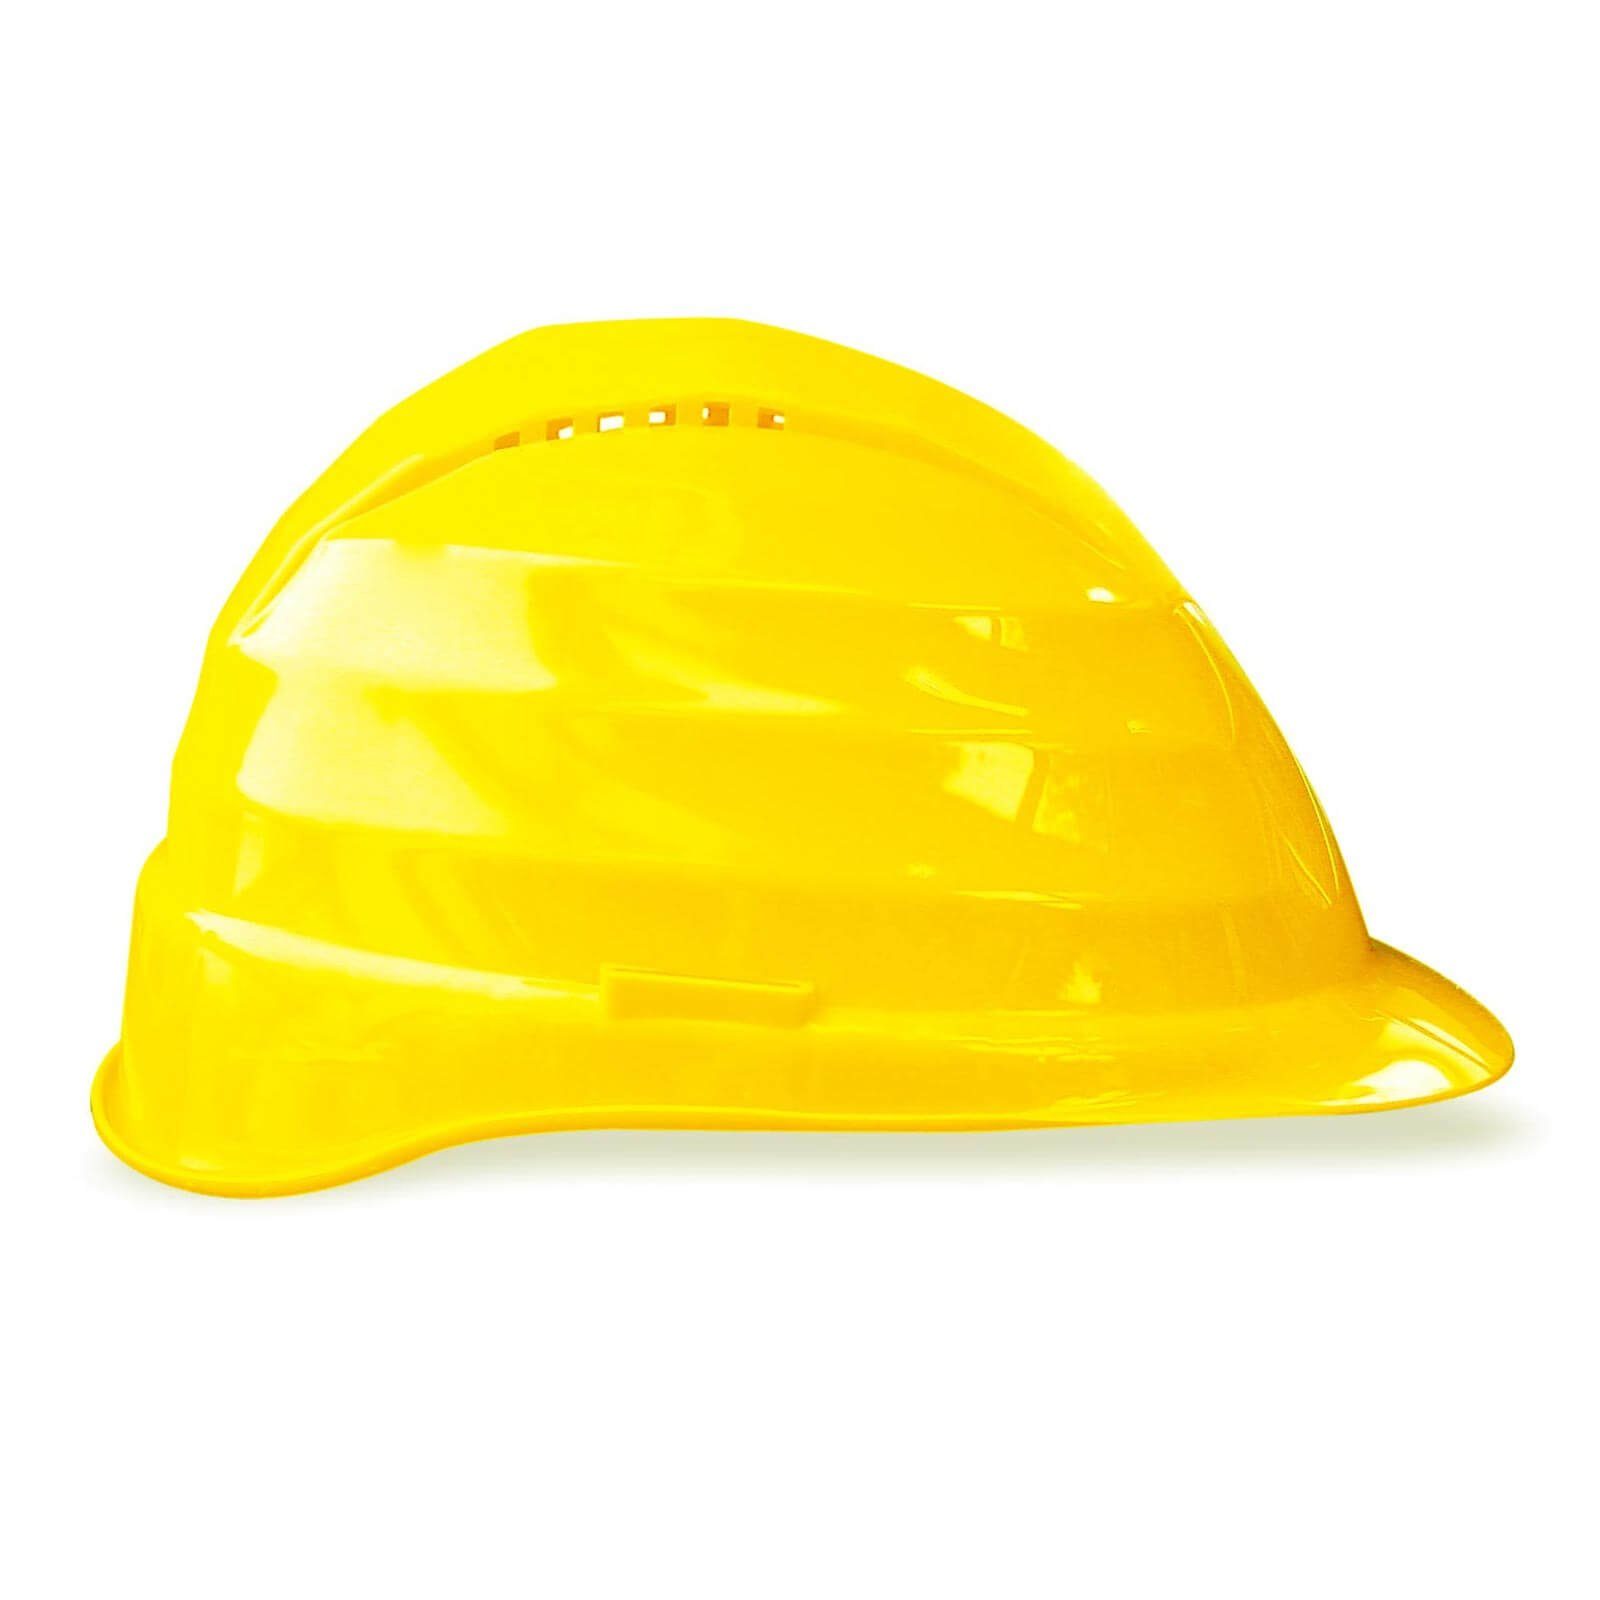 Helm gelb Schutzhelm ENHA C6 ROCKMANN Sturzhelm, Schutzhelm ENHA Arbeitsschutzhelm, -